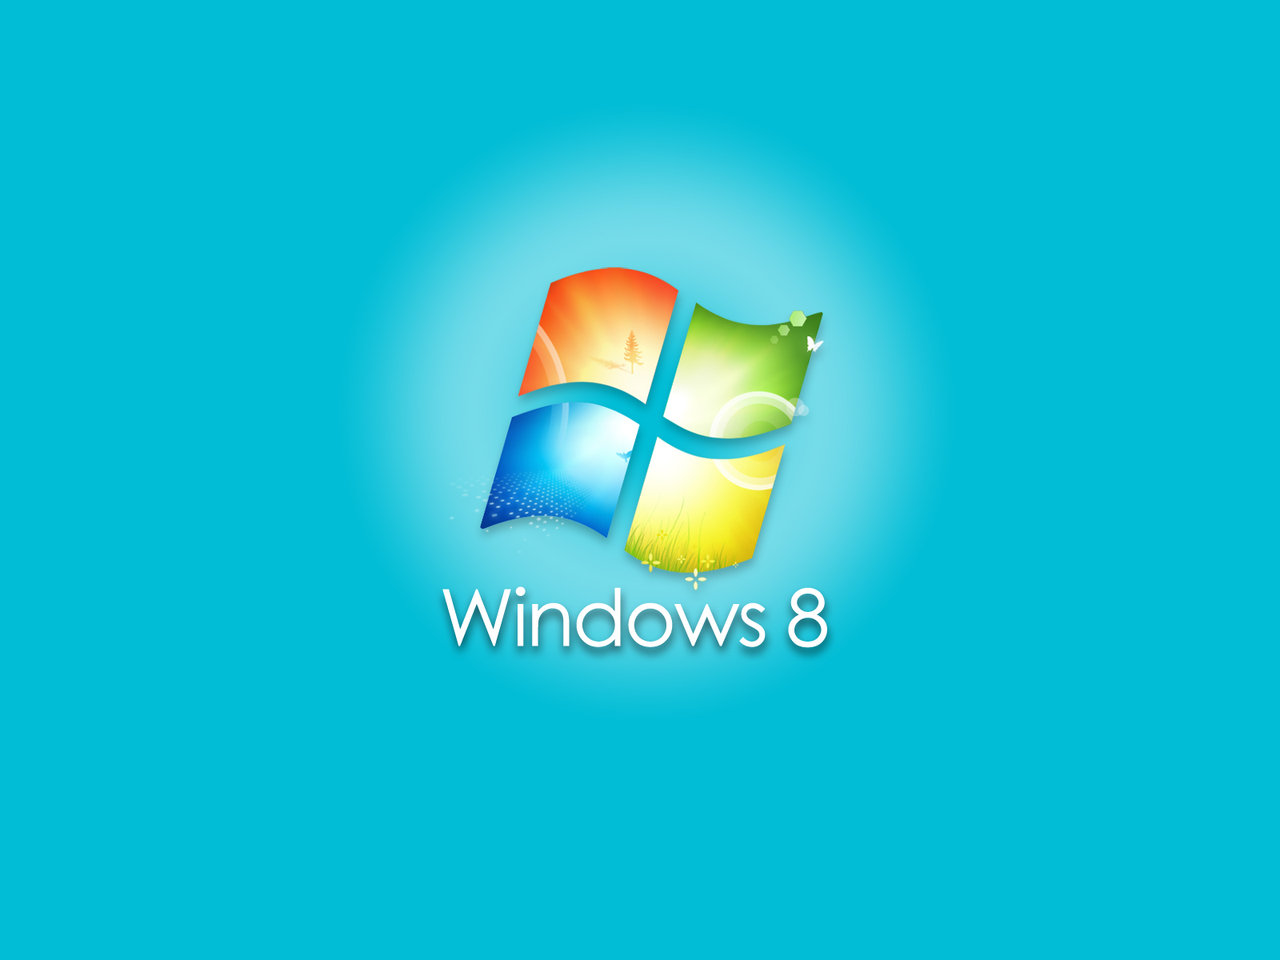 Sistema operativo windows 8 de microsoft. nivel básico.